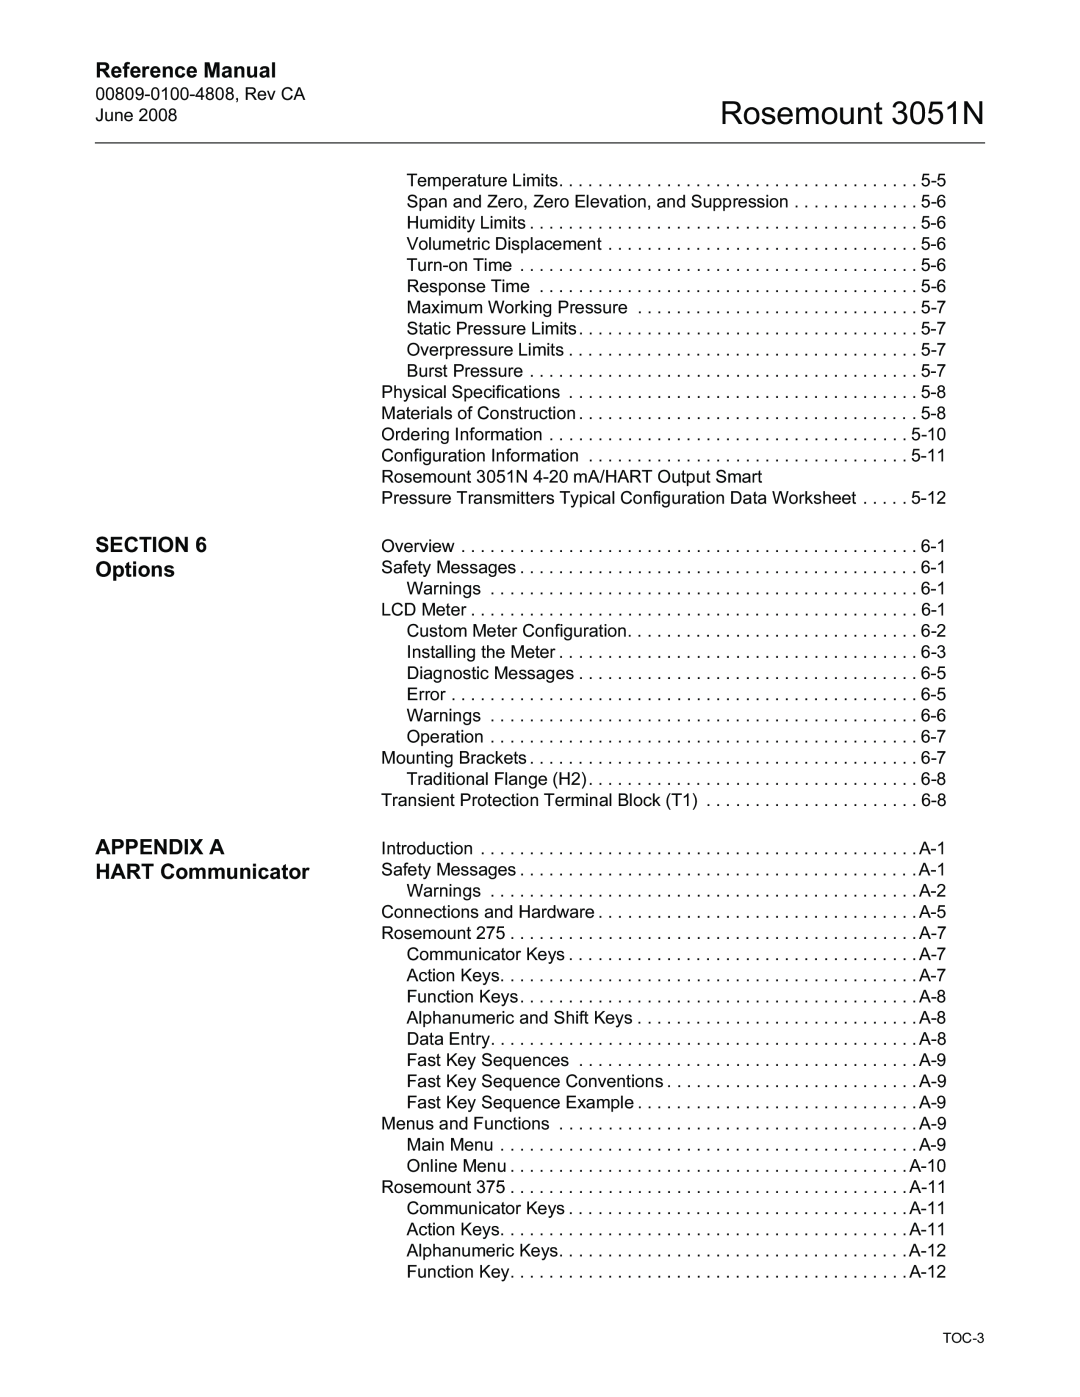 Emerson manual Options, APPENDIX A HART Communicator, Rosemount 3051N, Reference Manual 